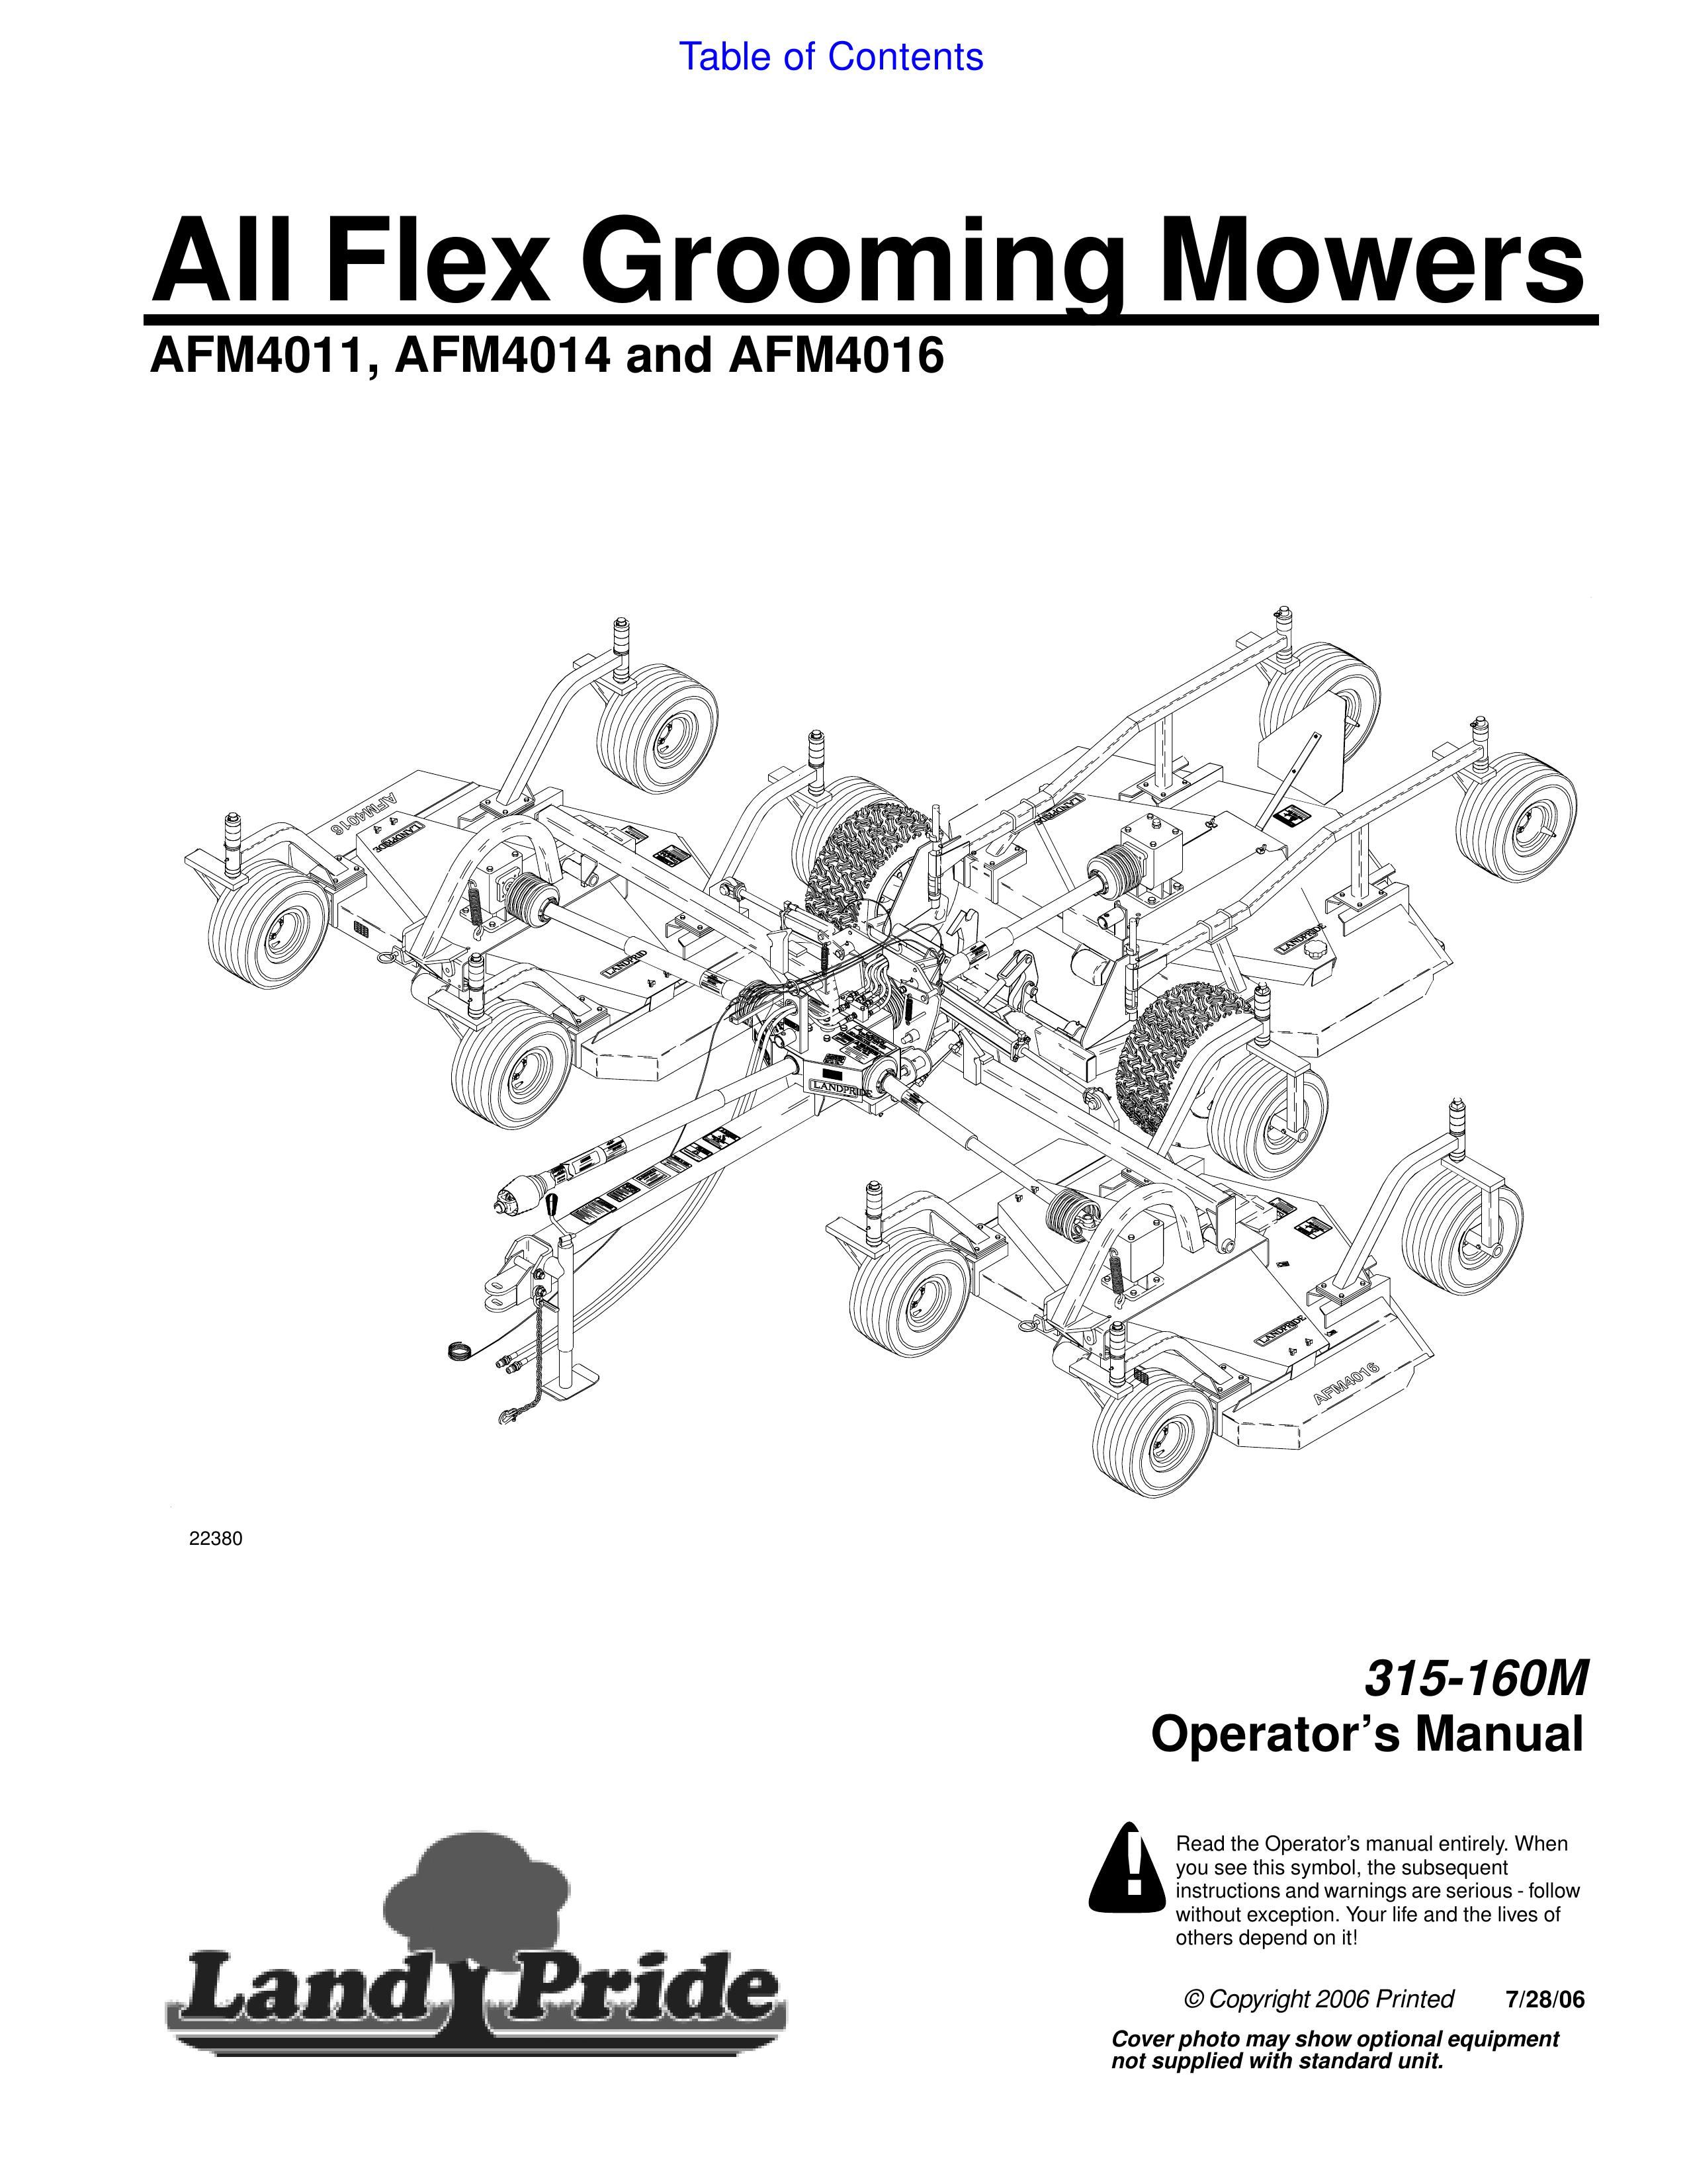 Land Pride AFM4016 Lawn Mower User Manual